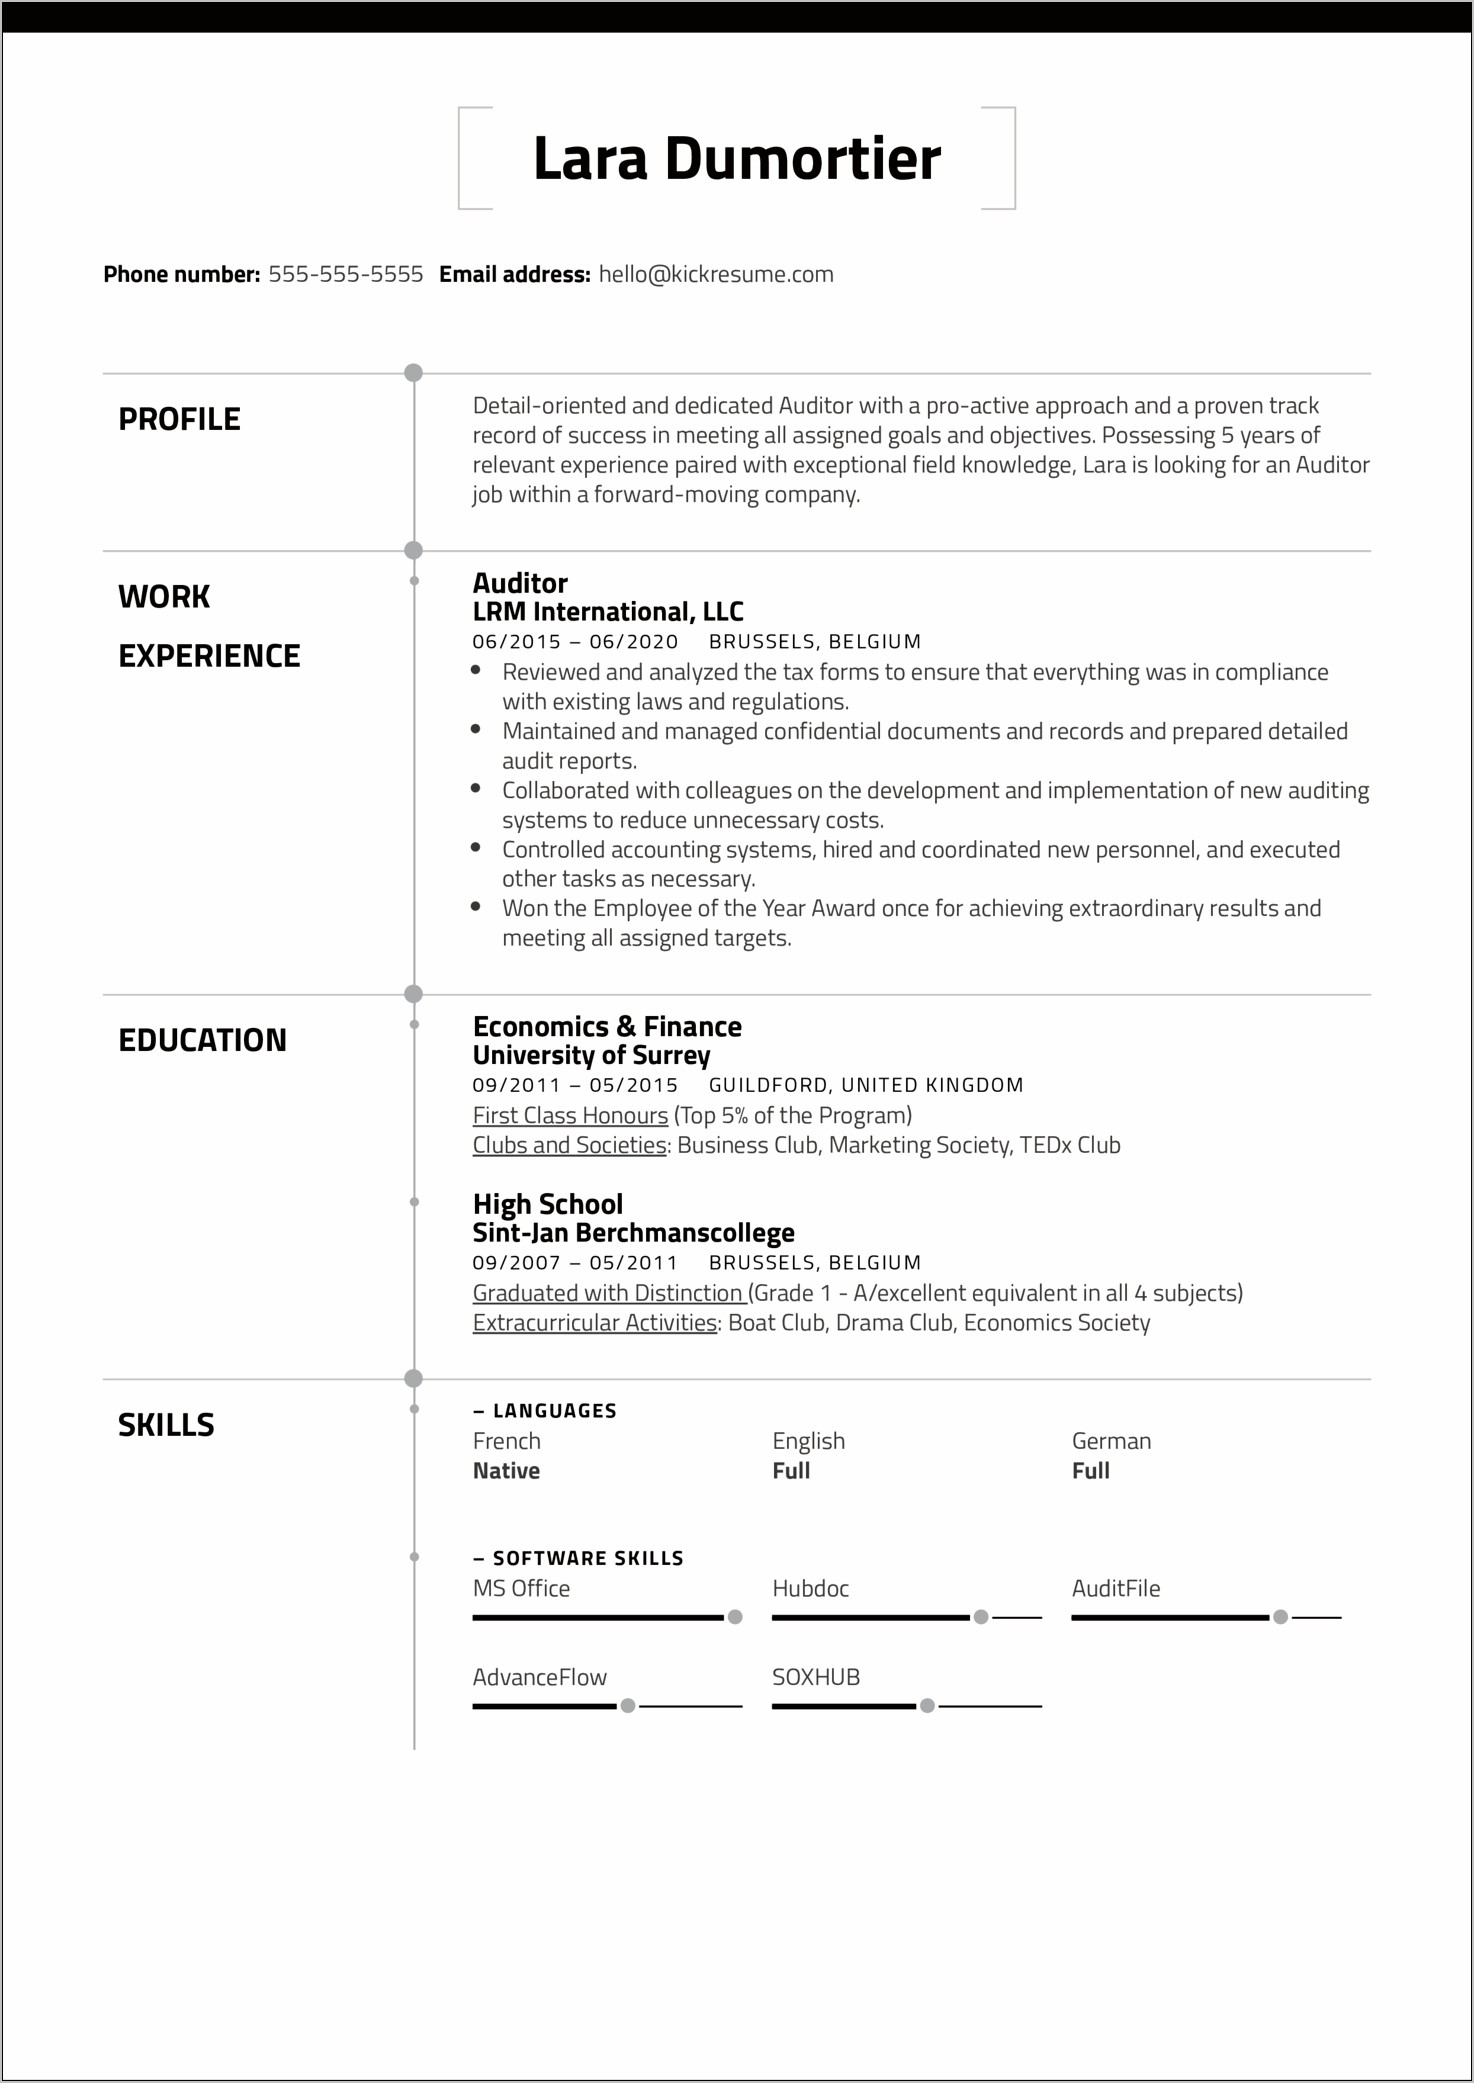 Job Application And Resume Model